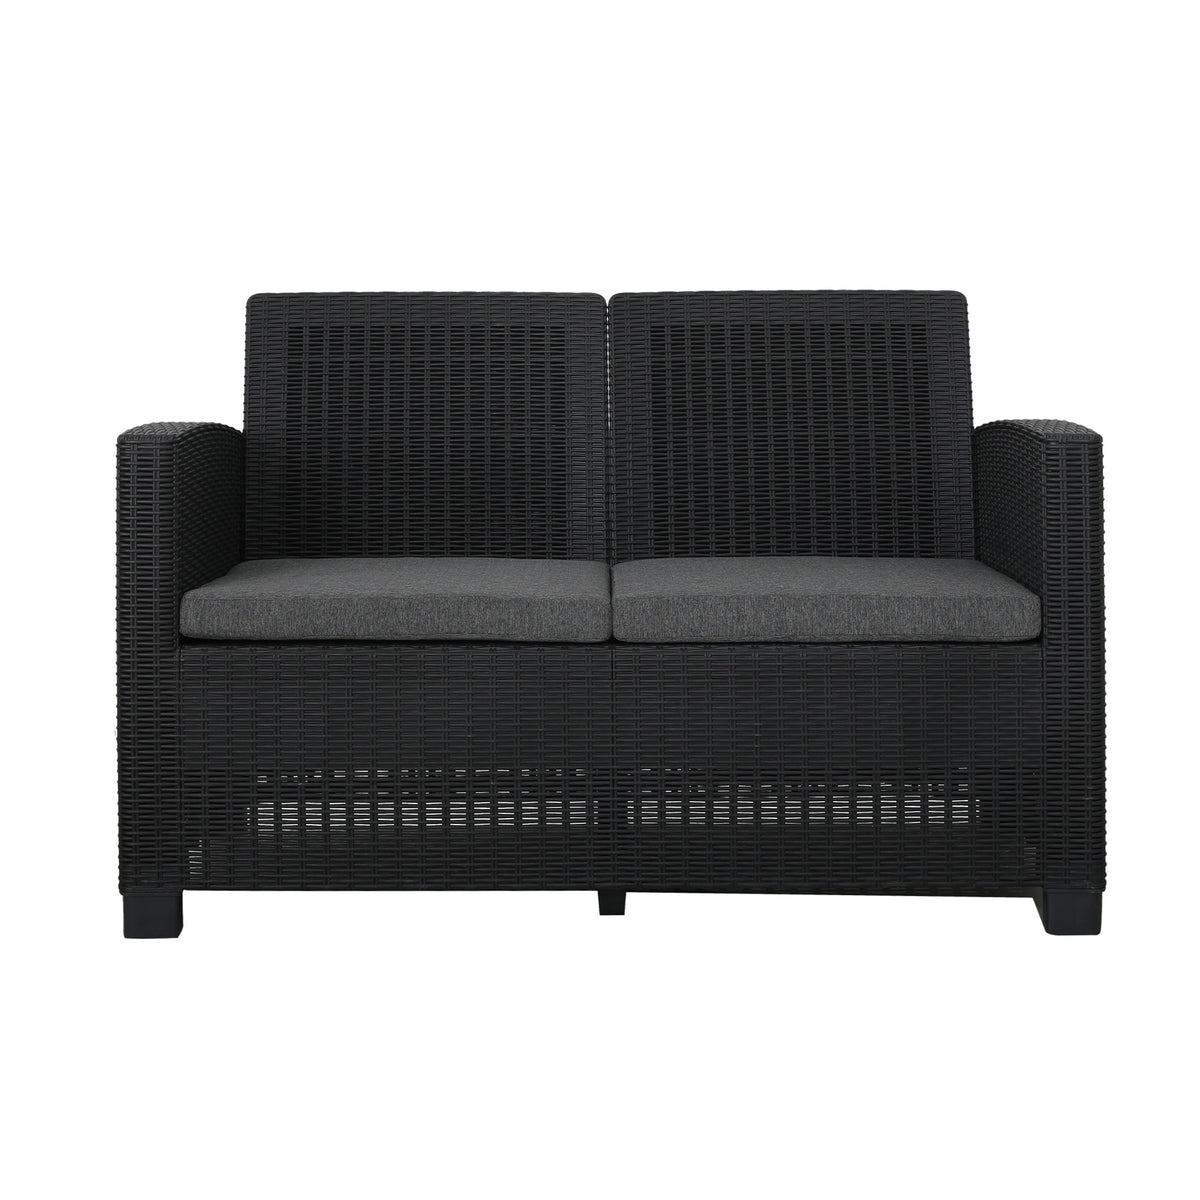 Faro Black 4 Seater storage lounge set 2 seater rattan sofa